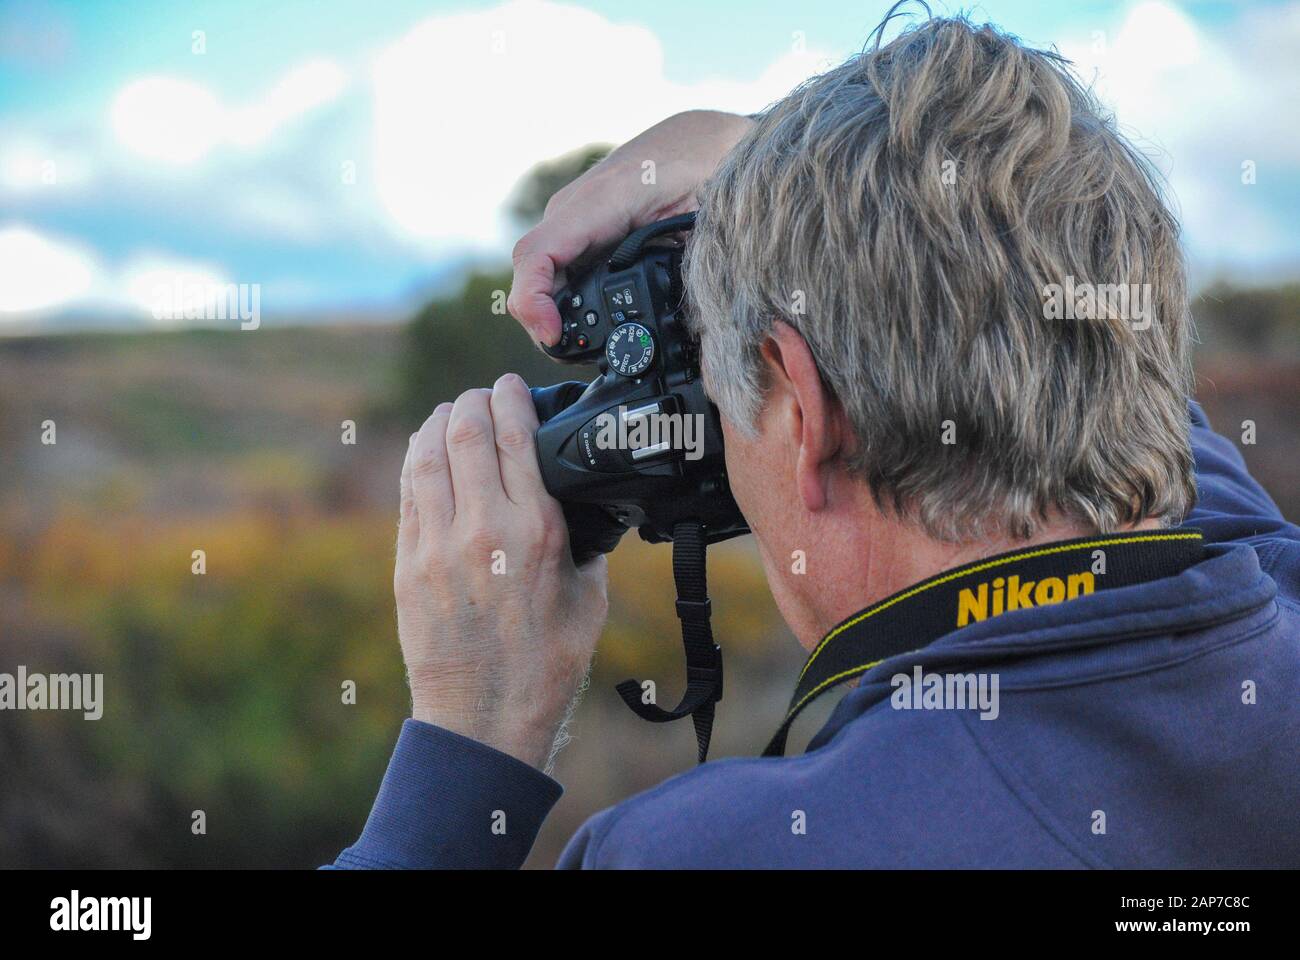 Photographer taking photo with Nikon camera Stock Photo